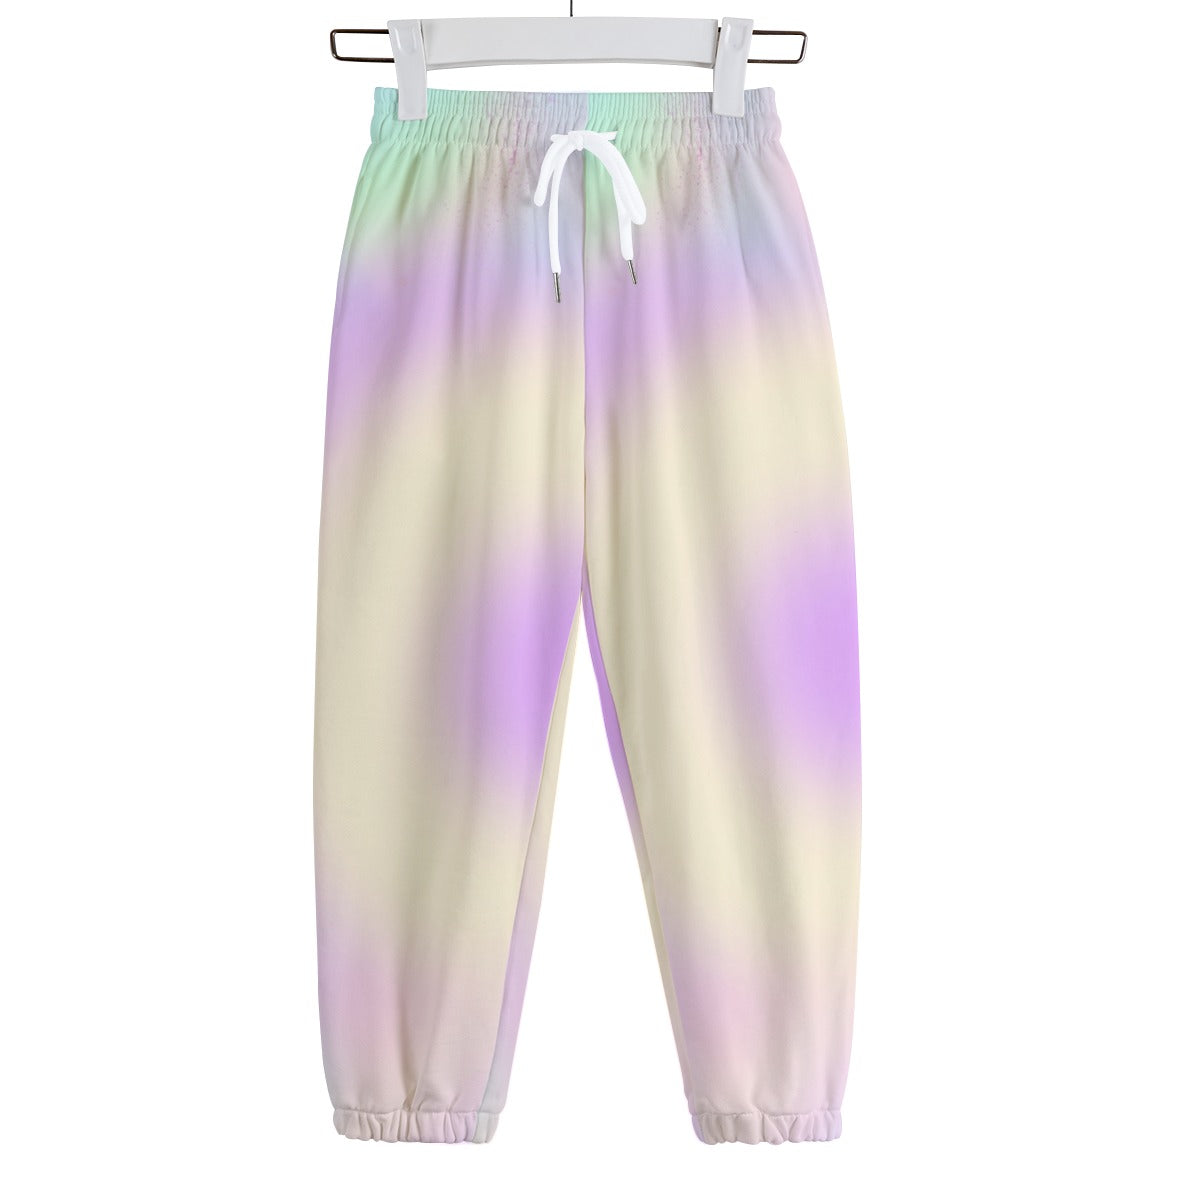 Cotton Candy Prism Girl's Sweatpants | 100% Cotton